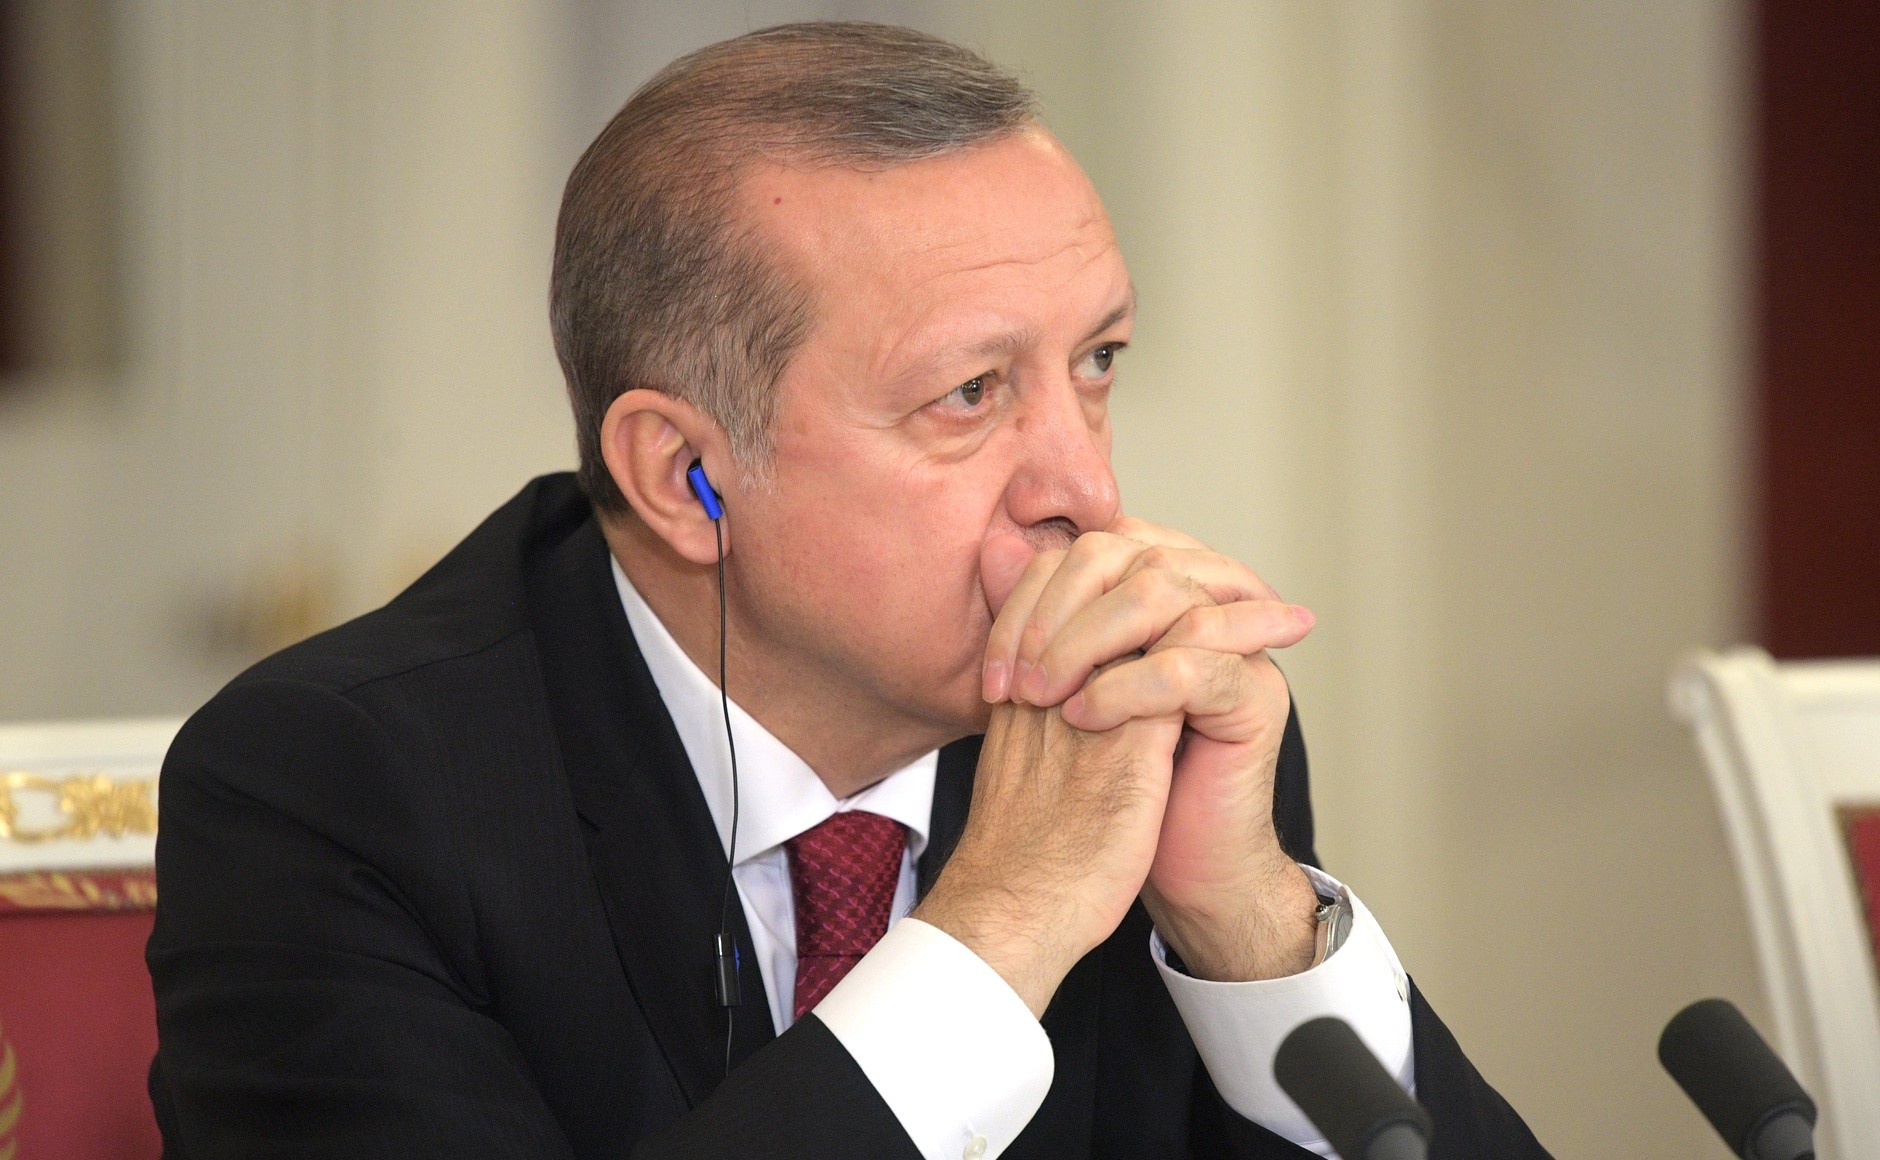 What does Erdoğan want from the Jamal Khashoggi Murder?